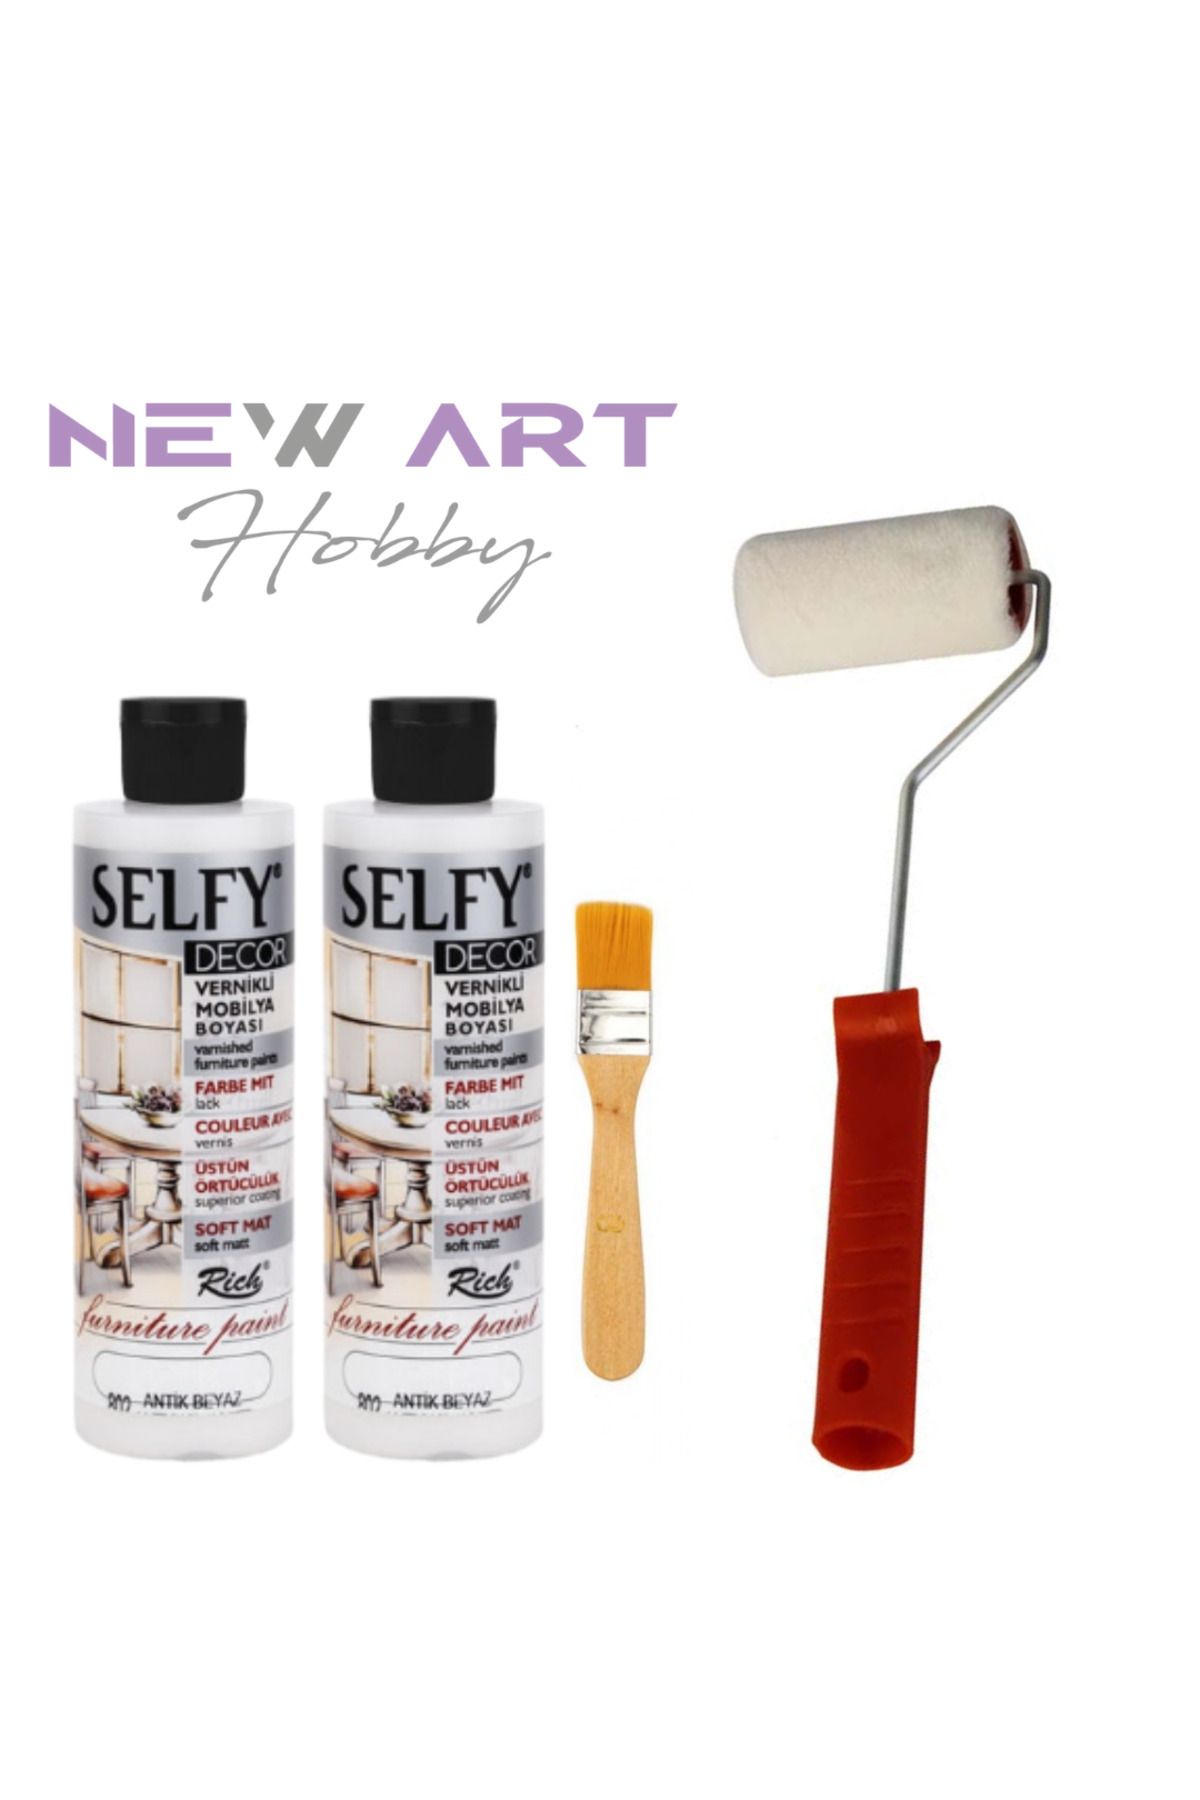 New Art Hobby Selfy Decor Kendinden Vernikli Mobilya Boyama Seti 240 Cc Antik Beyaz x2+ Maxi İpek Rulo + Fırça